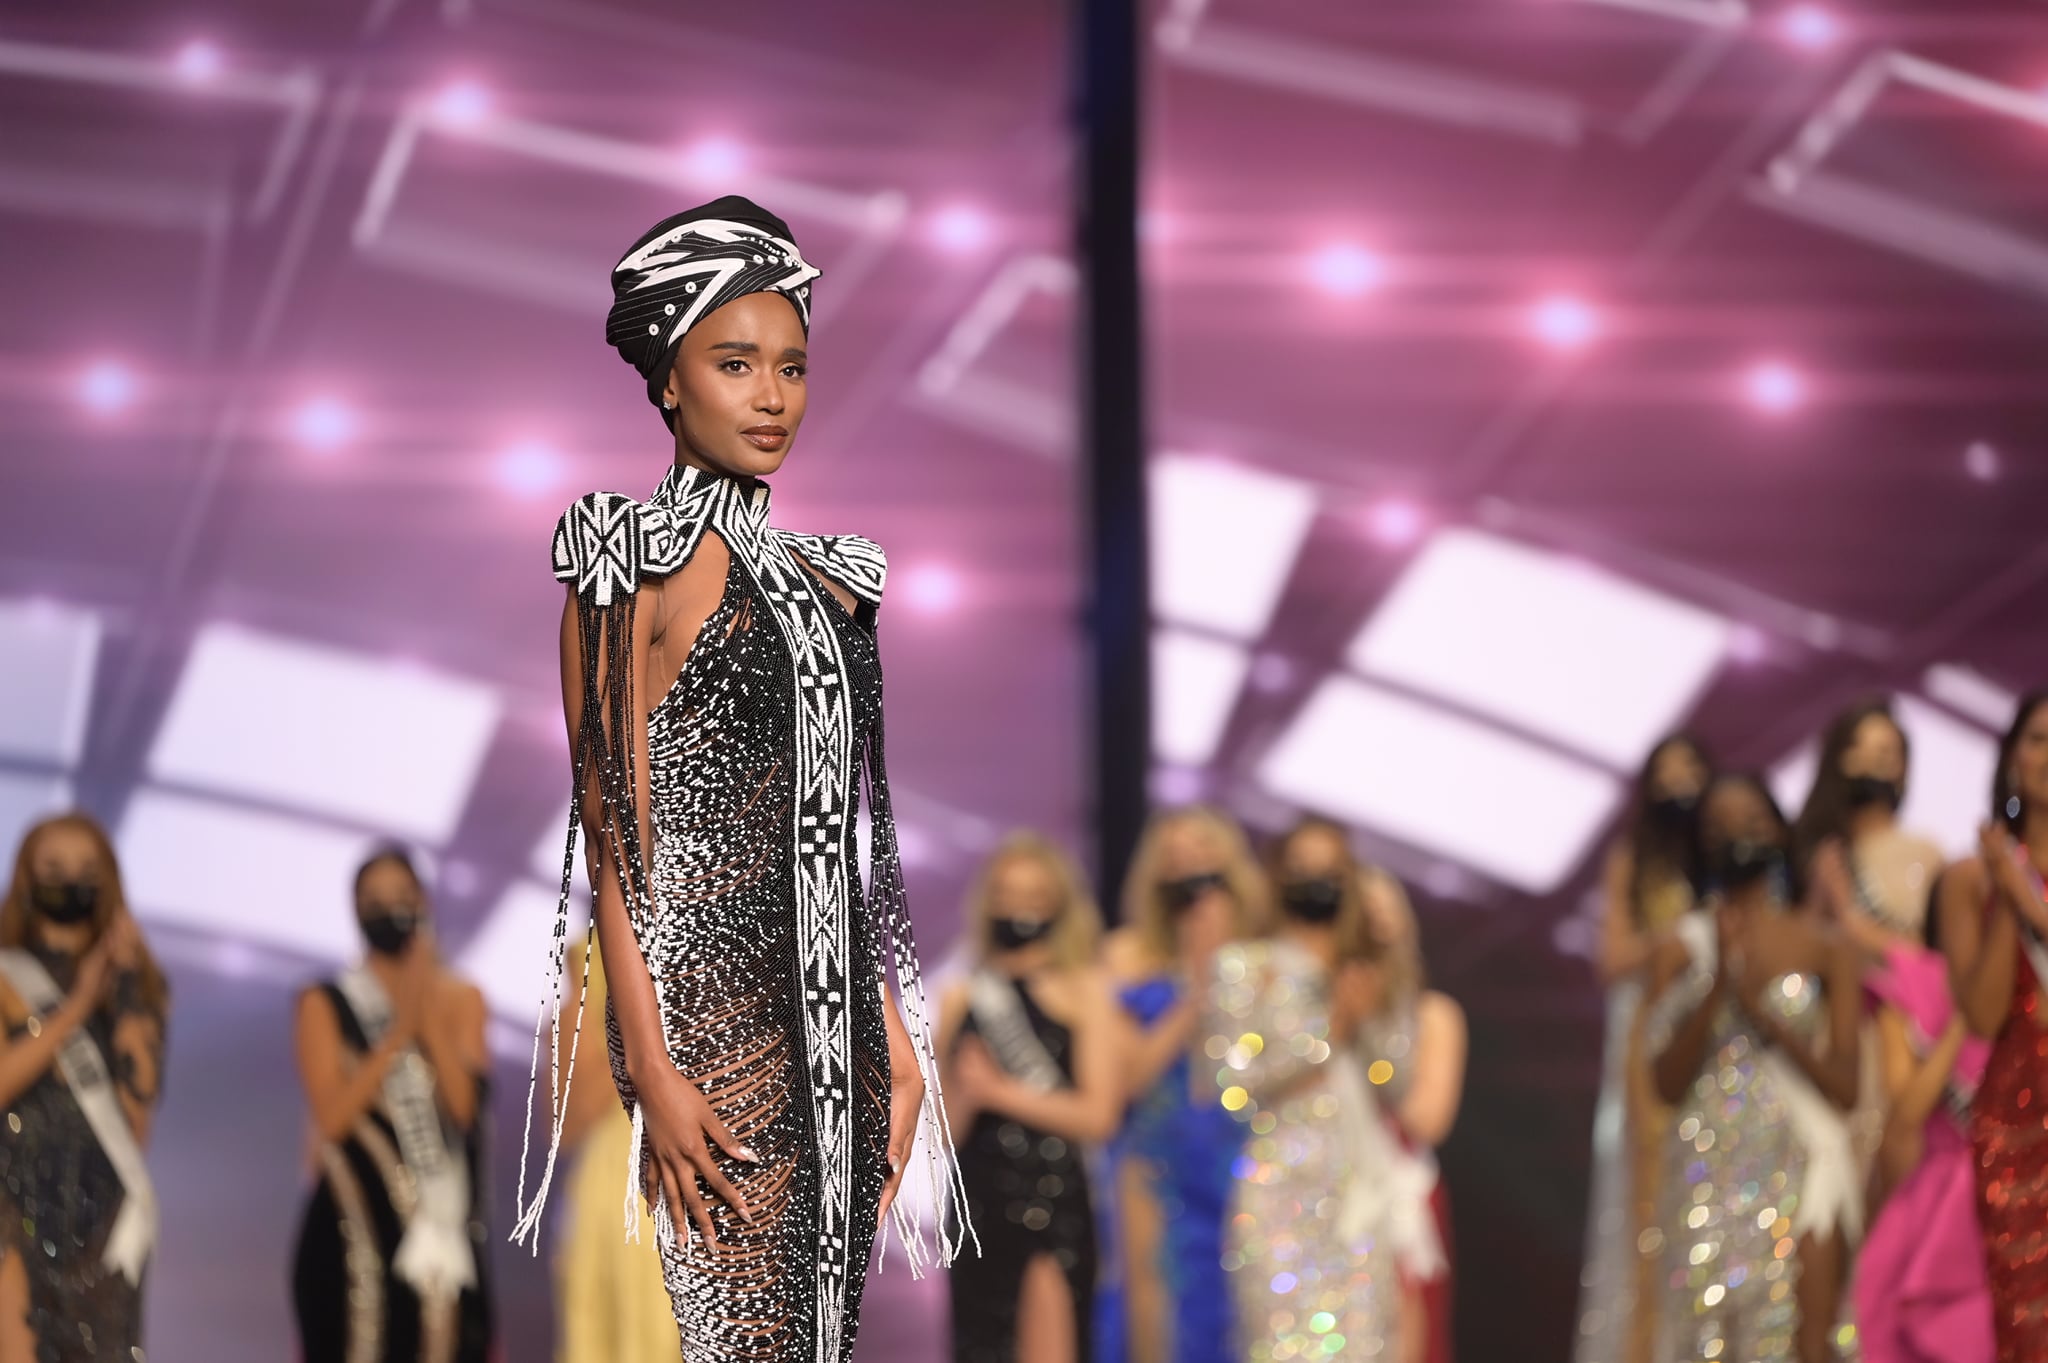 South Africa S Zozibini Tunzi Takes Her Final Walk As Miss Universe